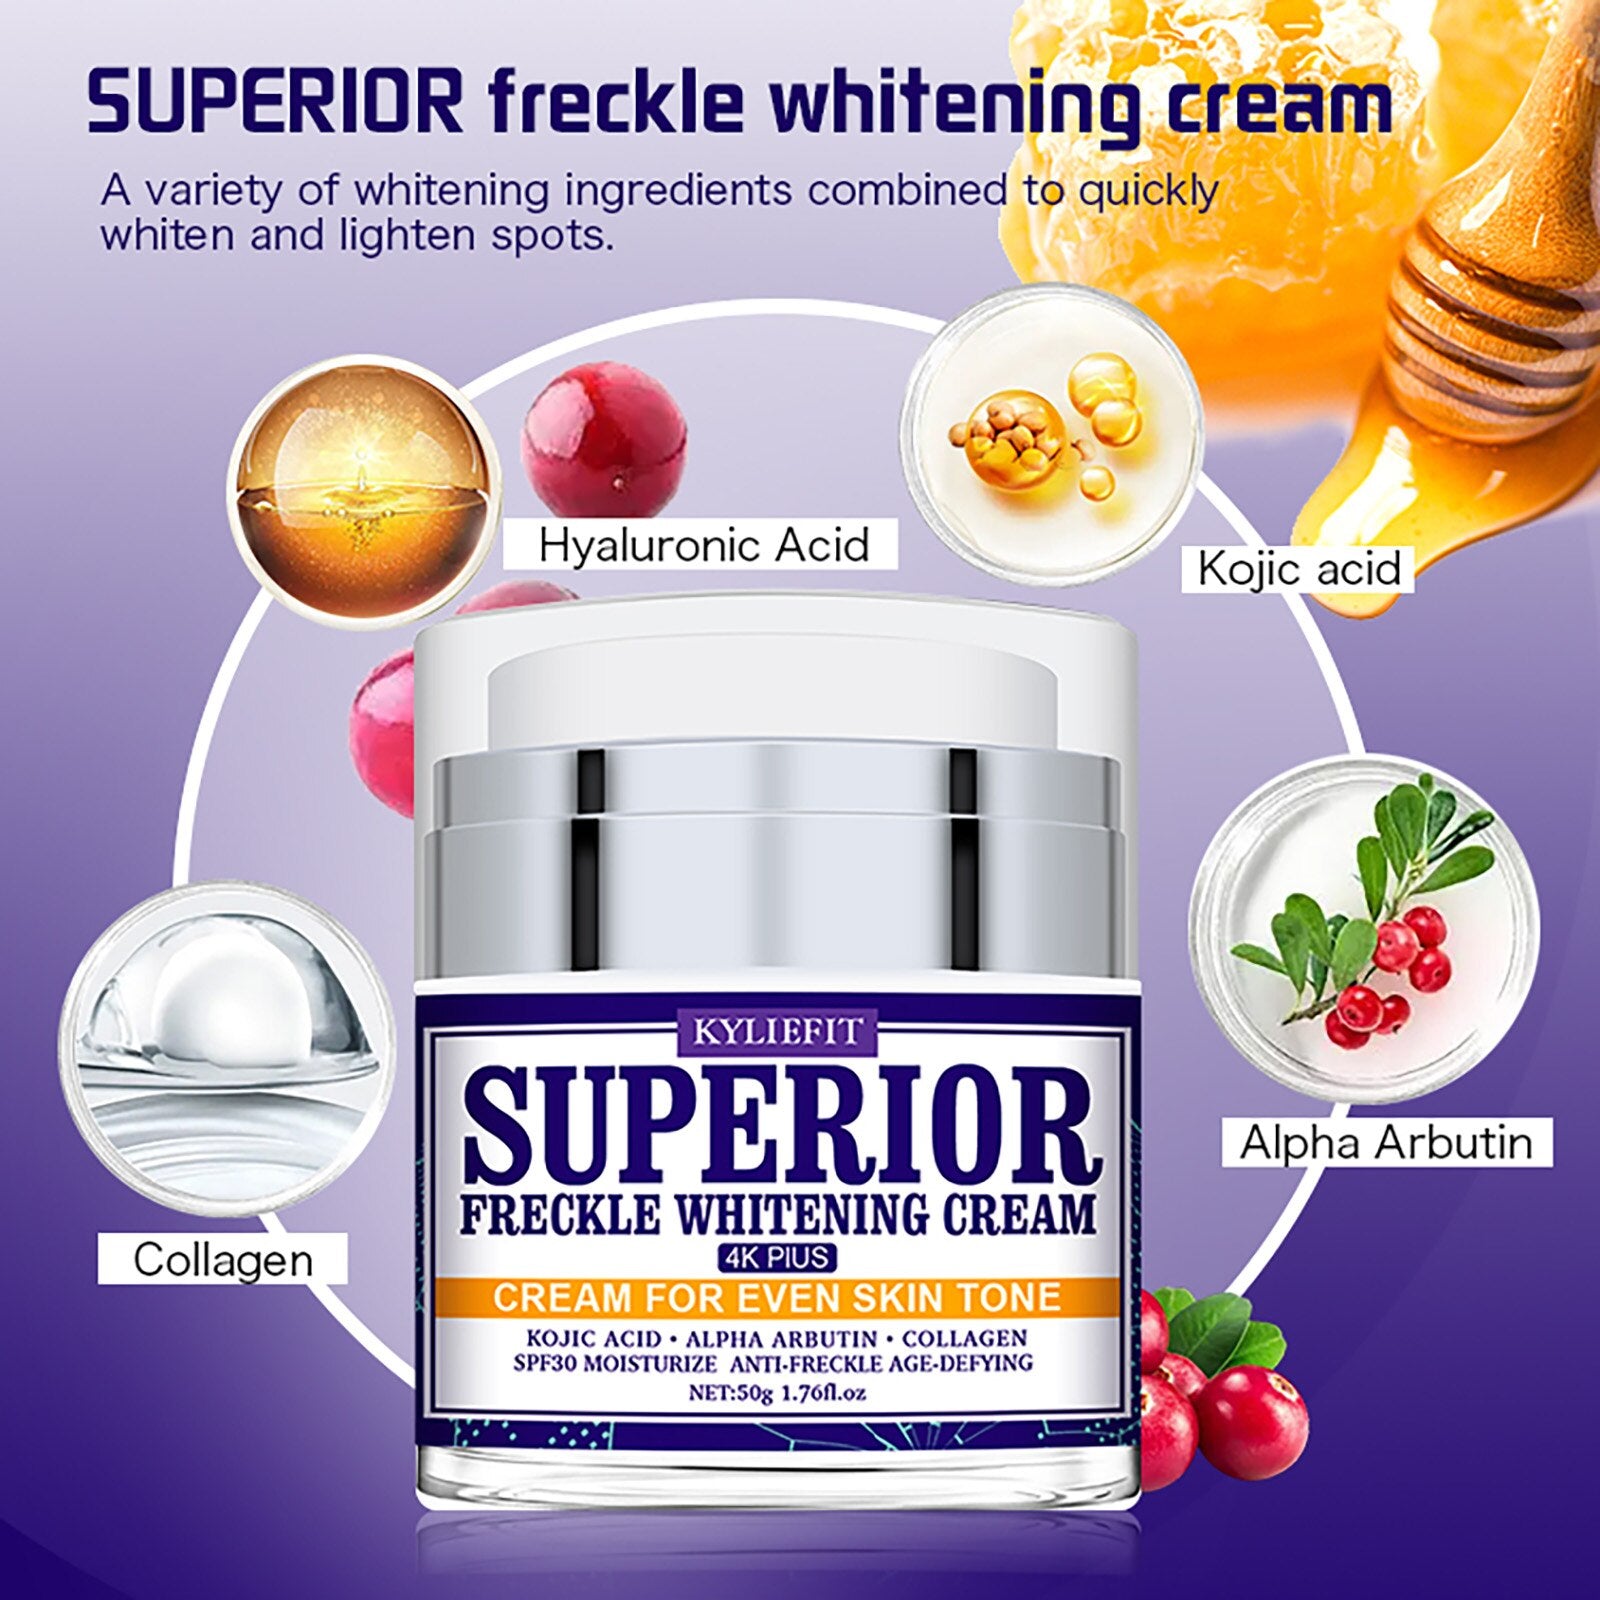 Superior Freckle Whitening Cream for Even Skin Tone